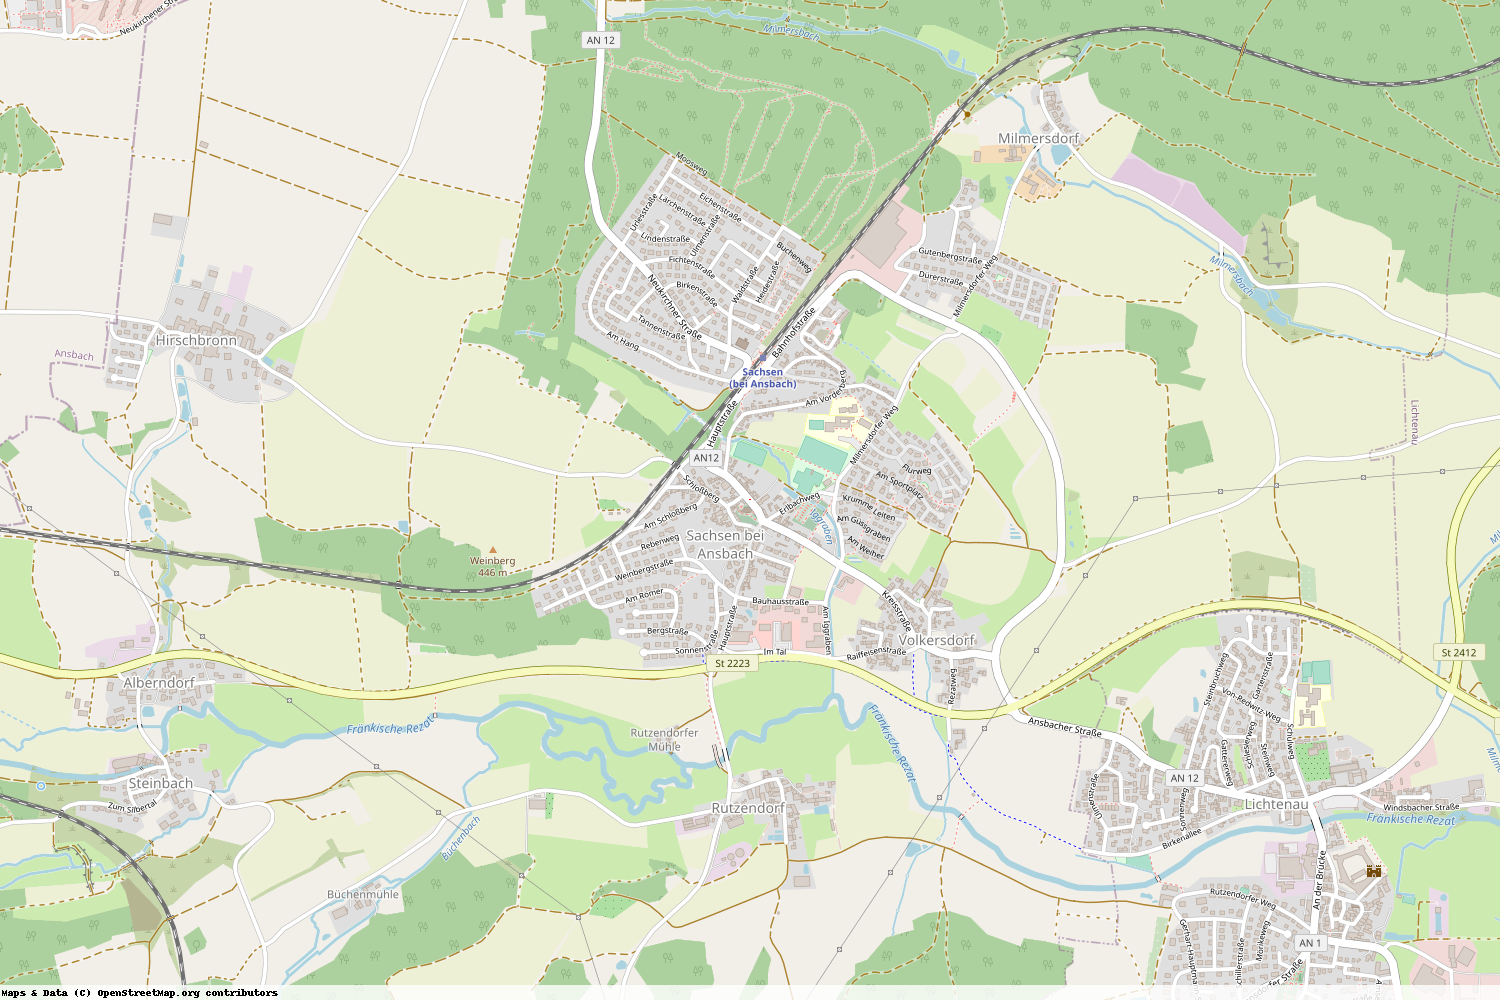 Ist gerade Stromausfall in Bayern - Ansbach - Sachsen b. Ansbach?